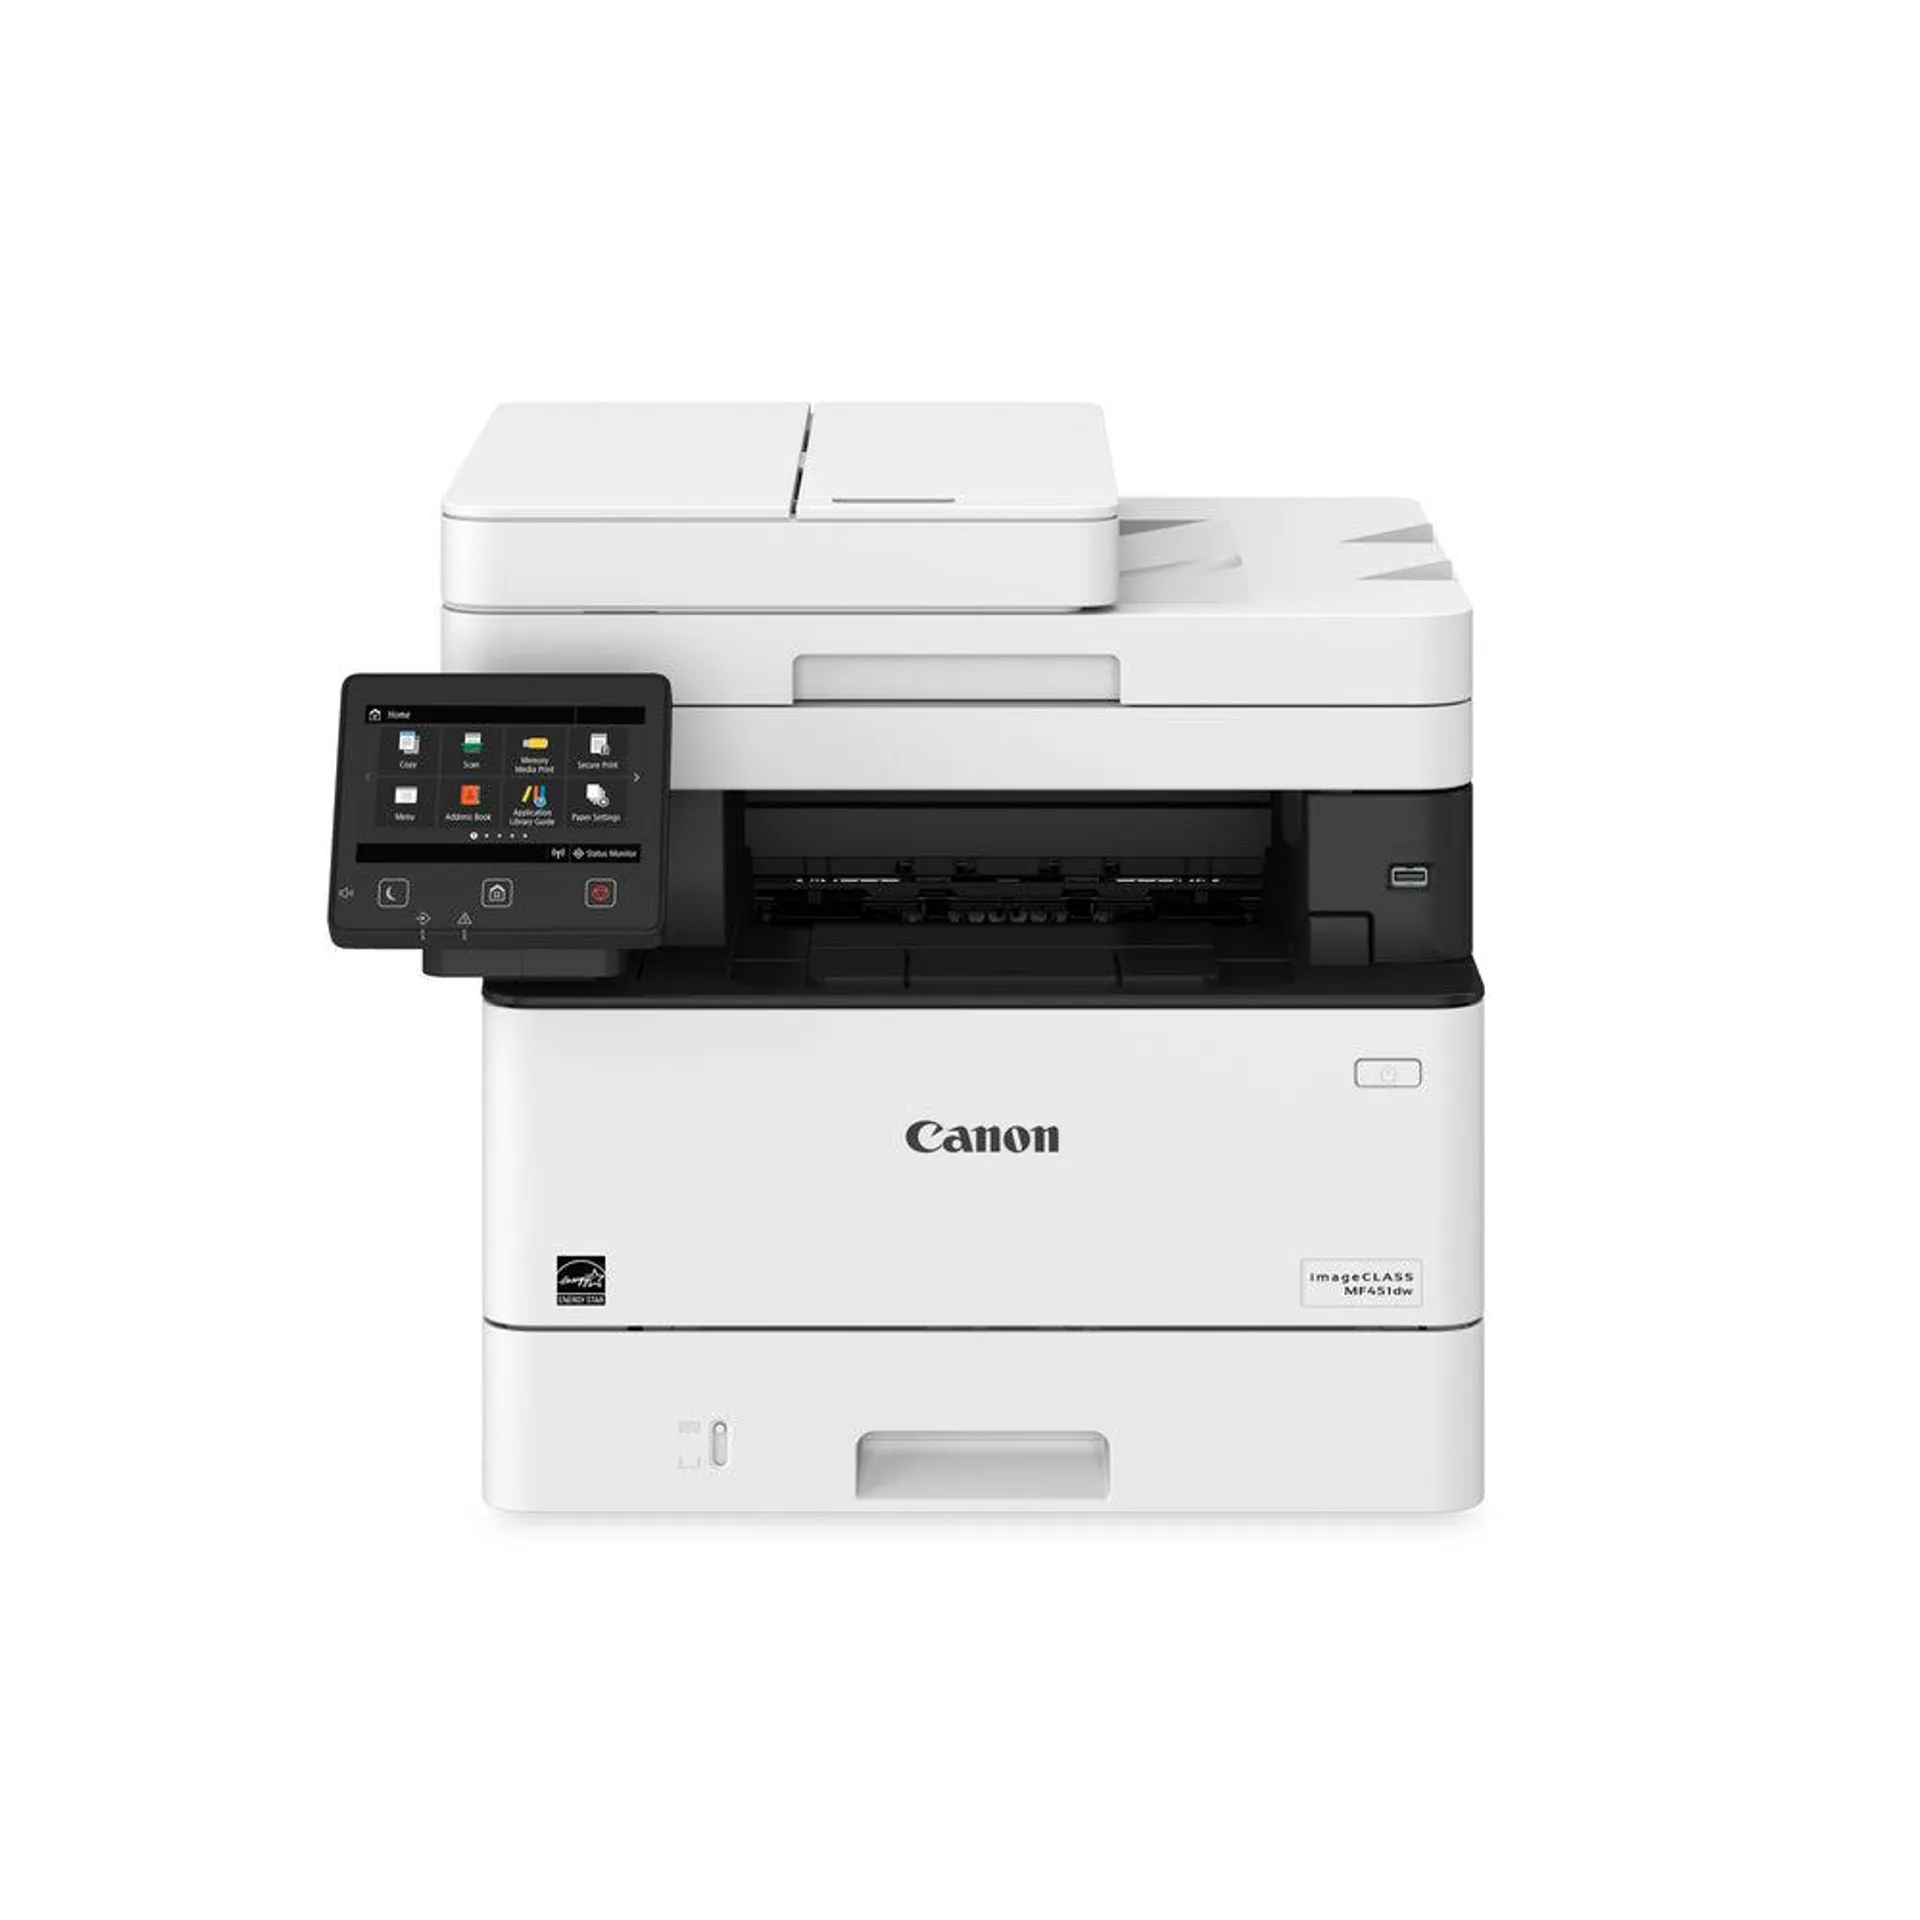 Canon imageCLASS MF451dw Monochrome Laser Printer